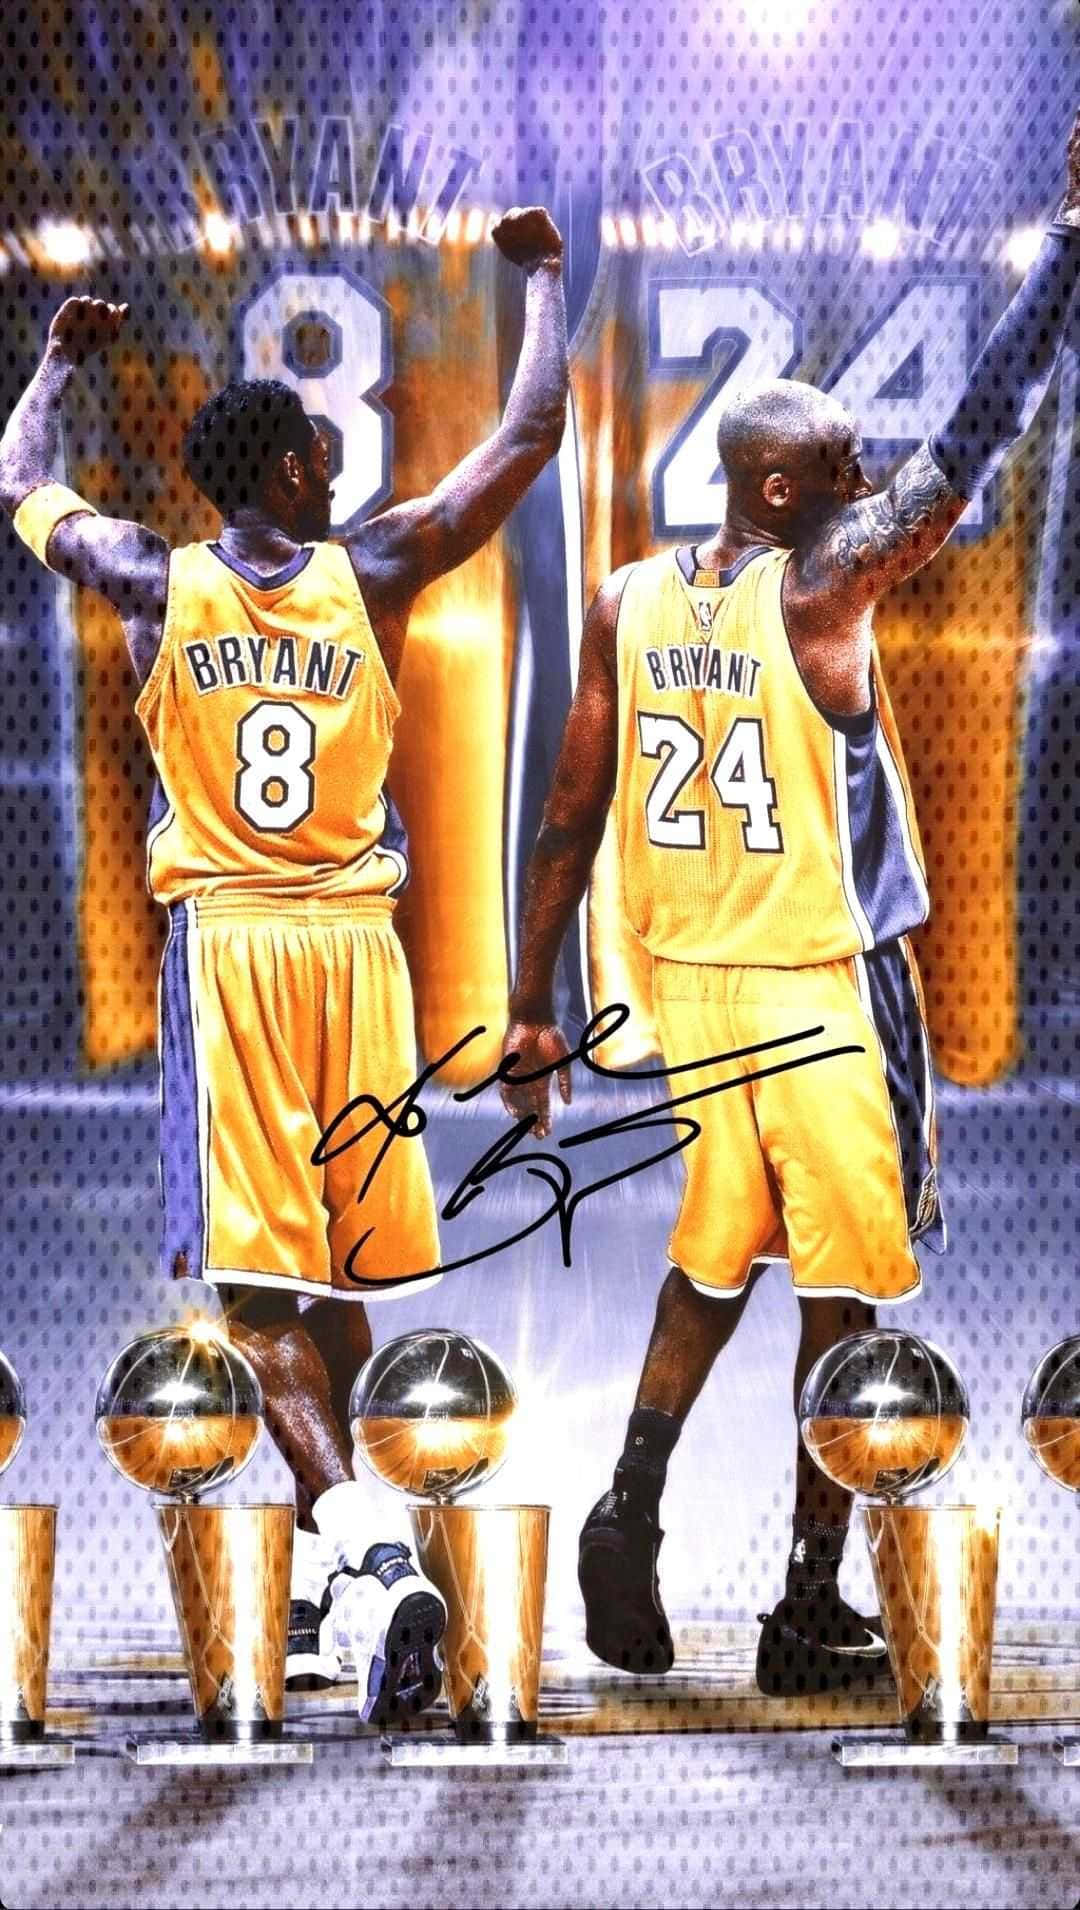 Kobe, the basketball legend.